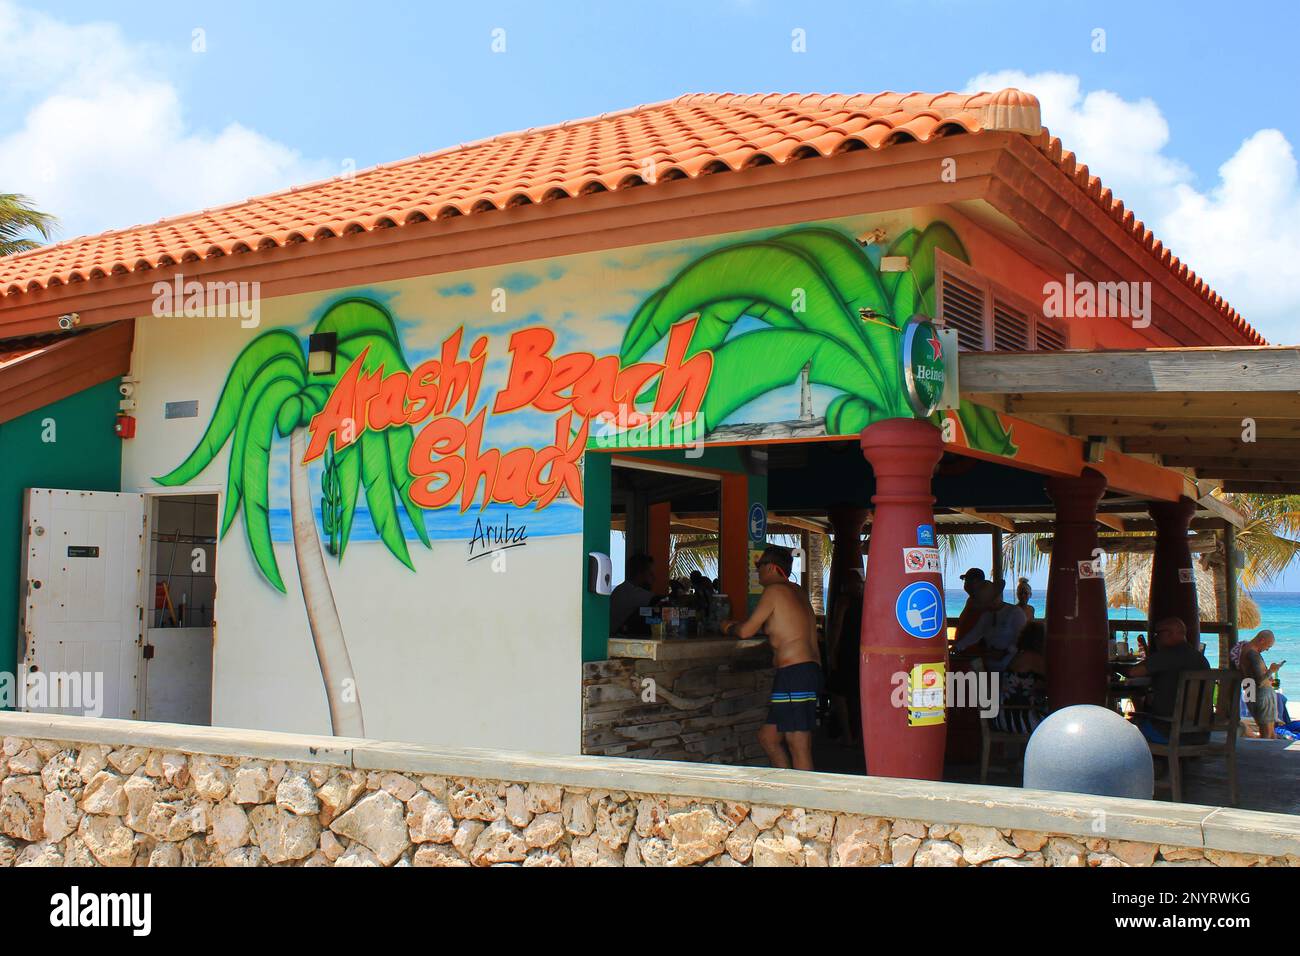 Arashi Beach, Noord, Aruba - 10. März 2022. Leute an der Bar, Arashi Beach Shack. Stockfoto